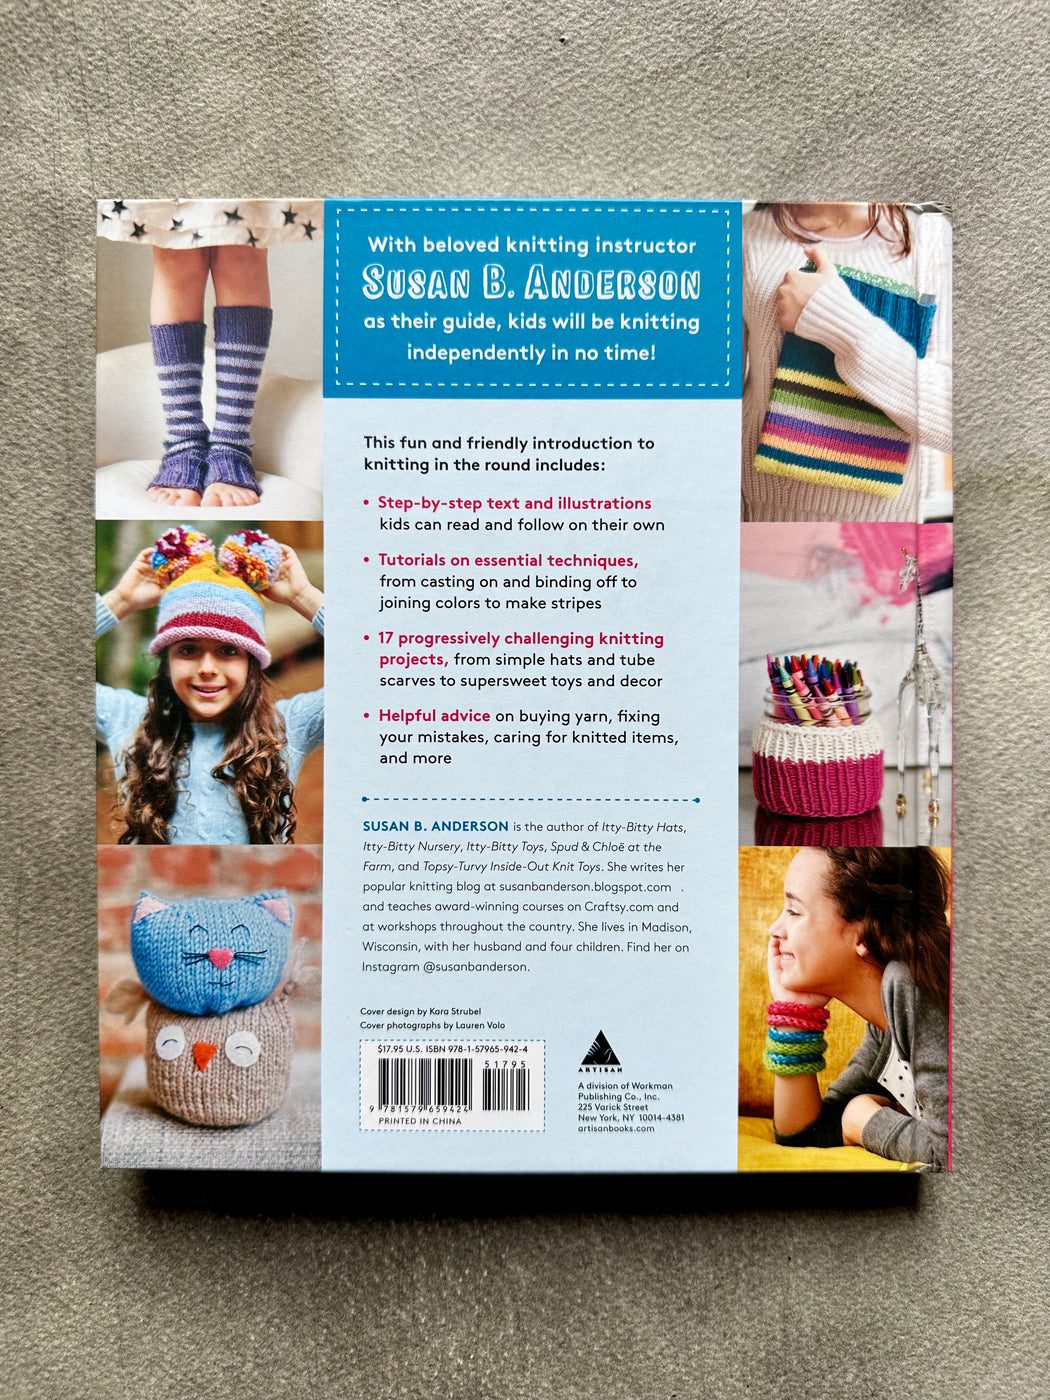 "Kids' Knitting Workshop" by Susan B. Anderson